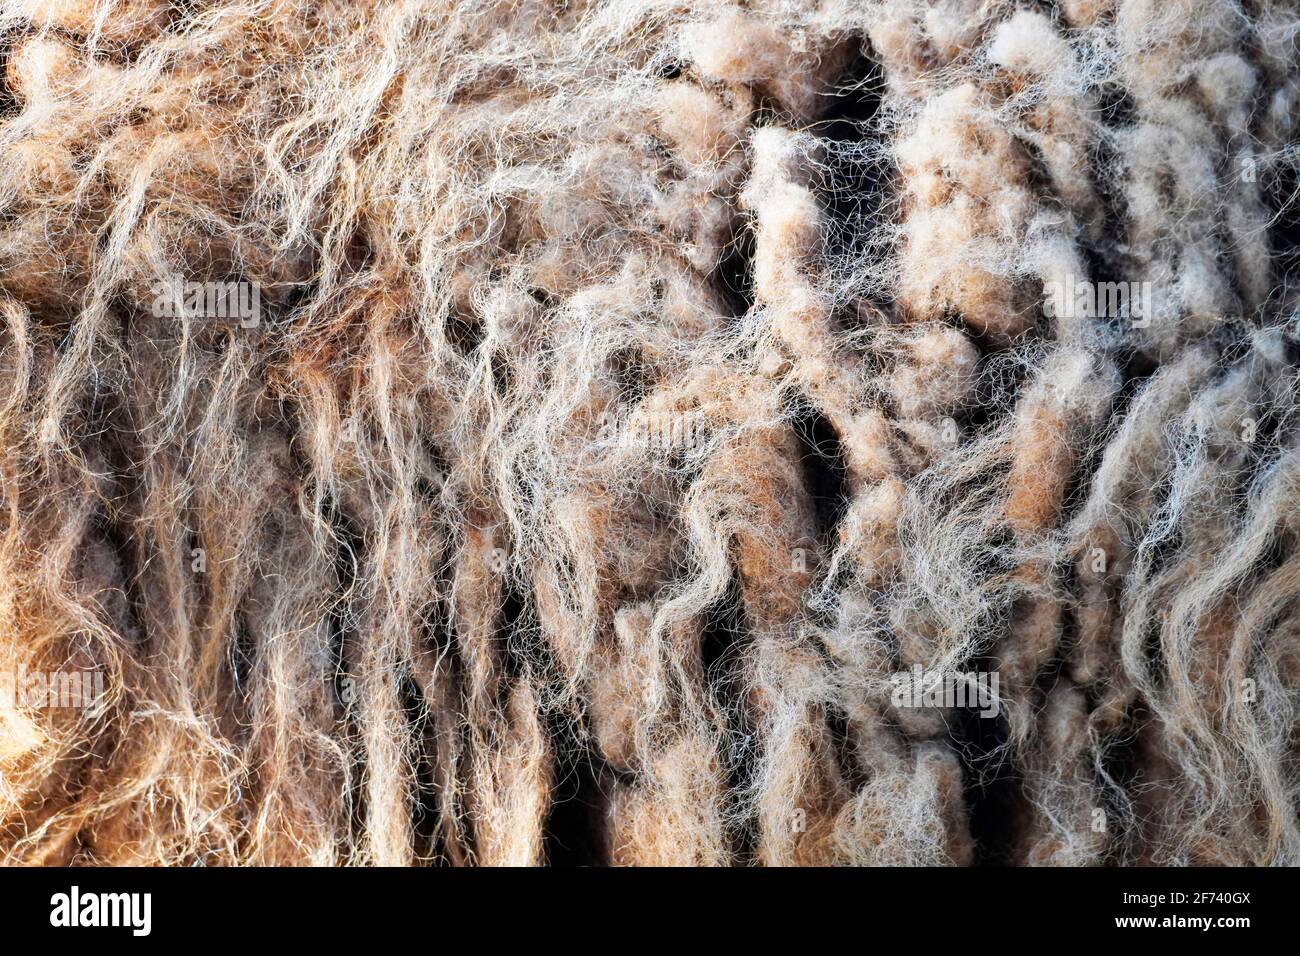 Matted brown sheepskin close up. Animal fur as a background motif. Stock Photo